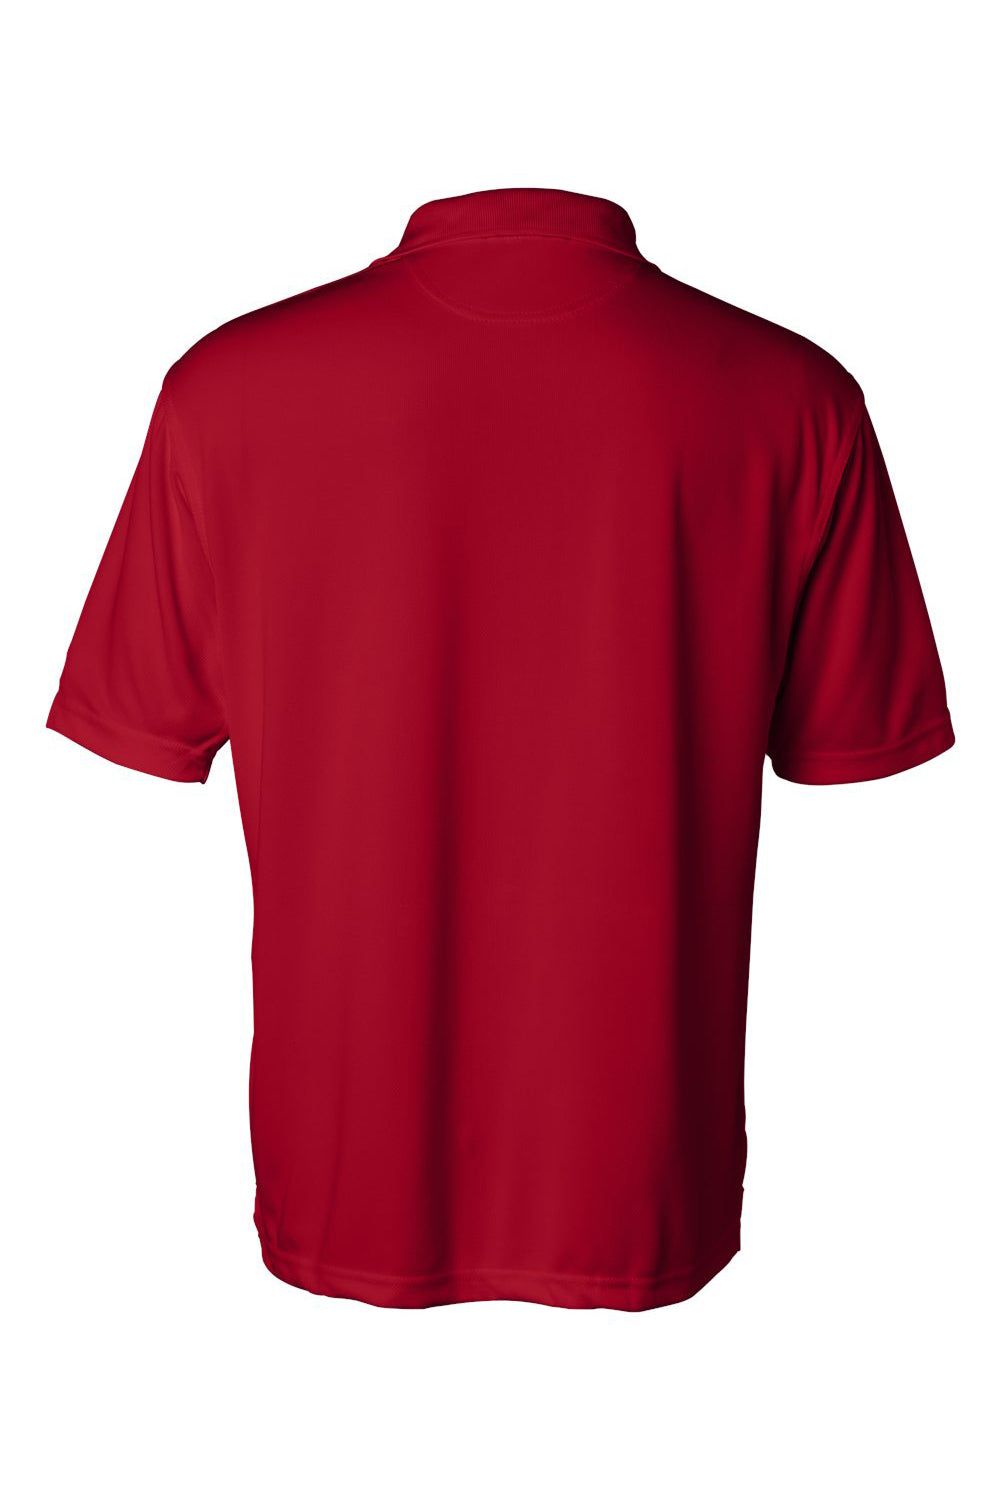 Sierra Pacific 0469 Mens Moisture Wish Mesh Short Sleeve Polo Shirt Red Flat Back